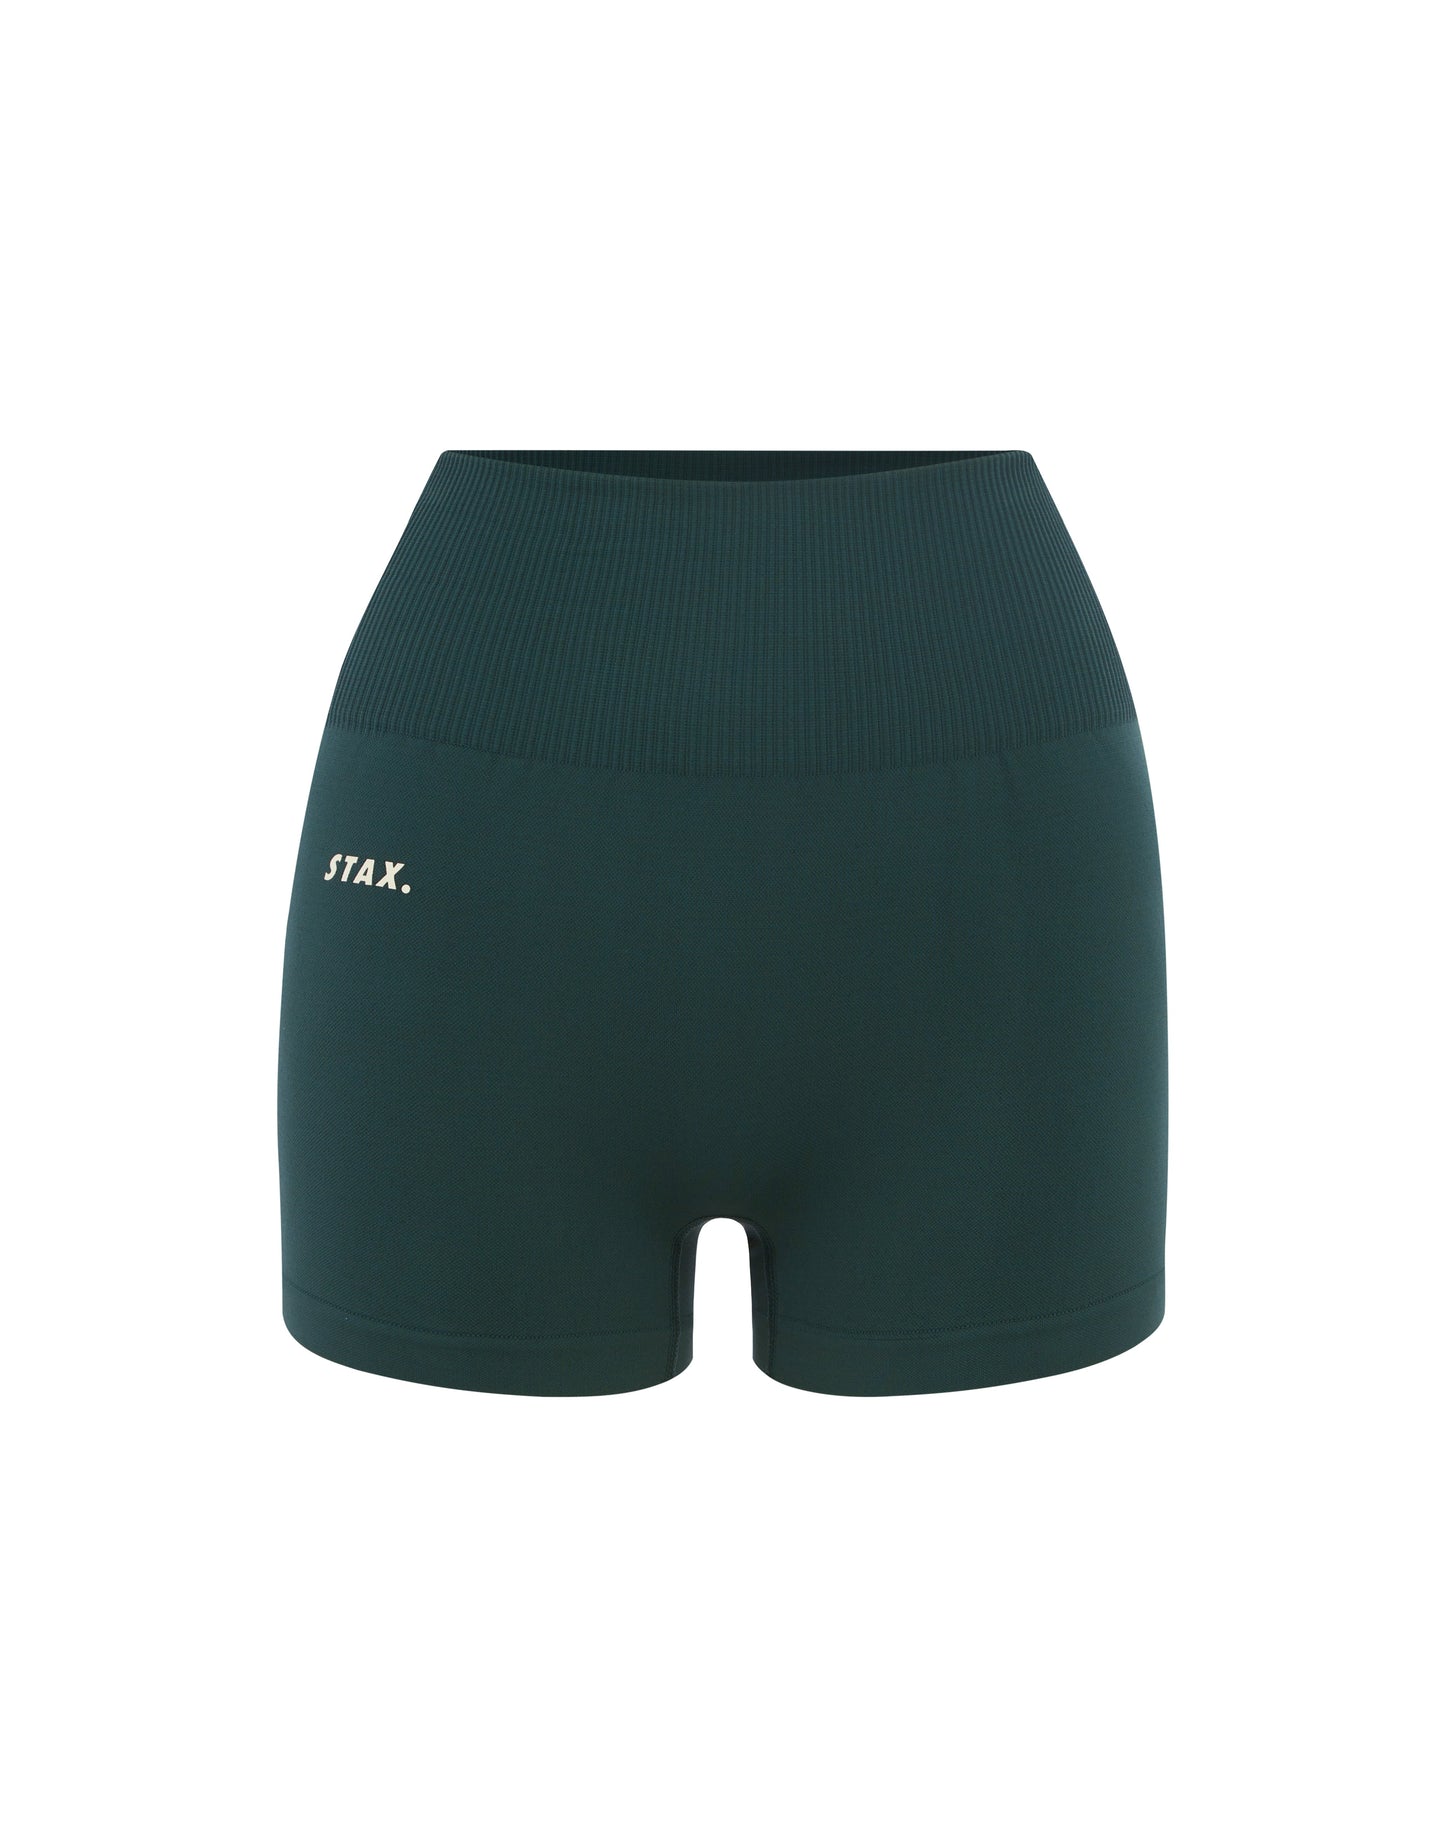 STAX. PSF Mini Bike Shorts - Pine